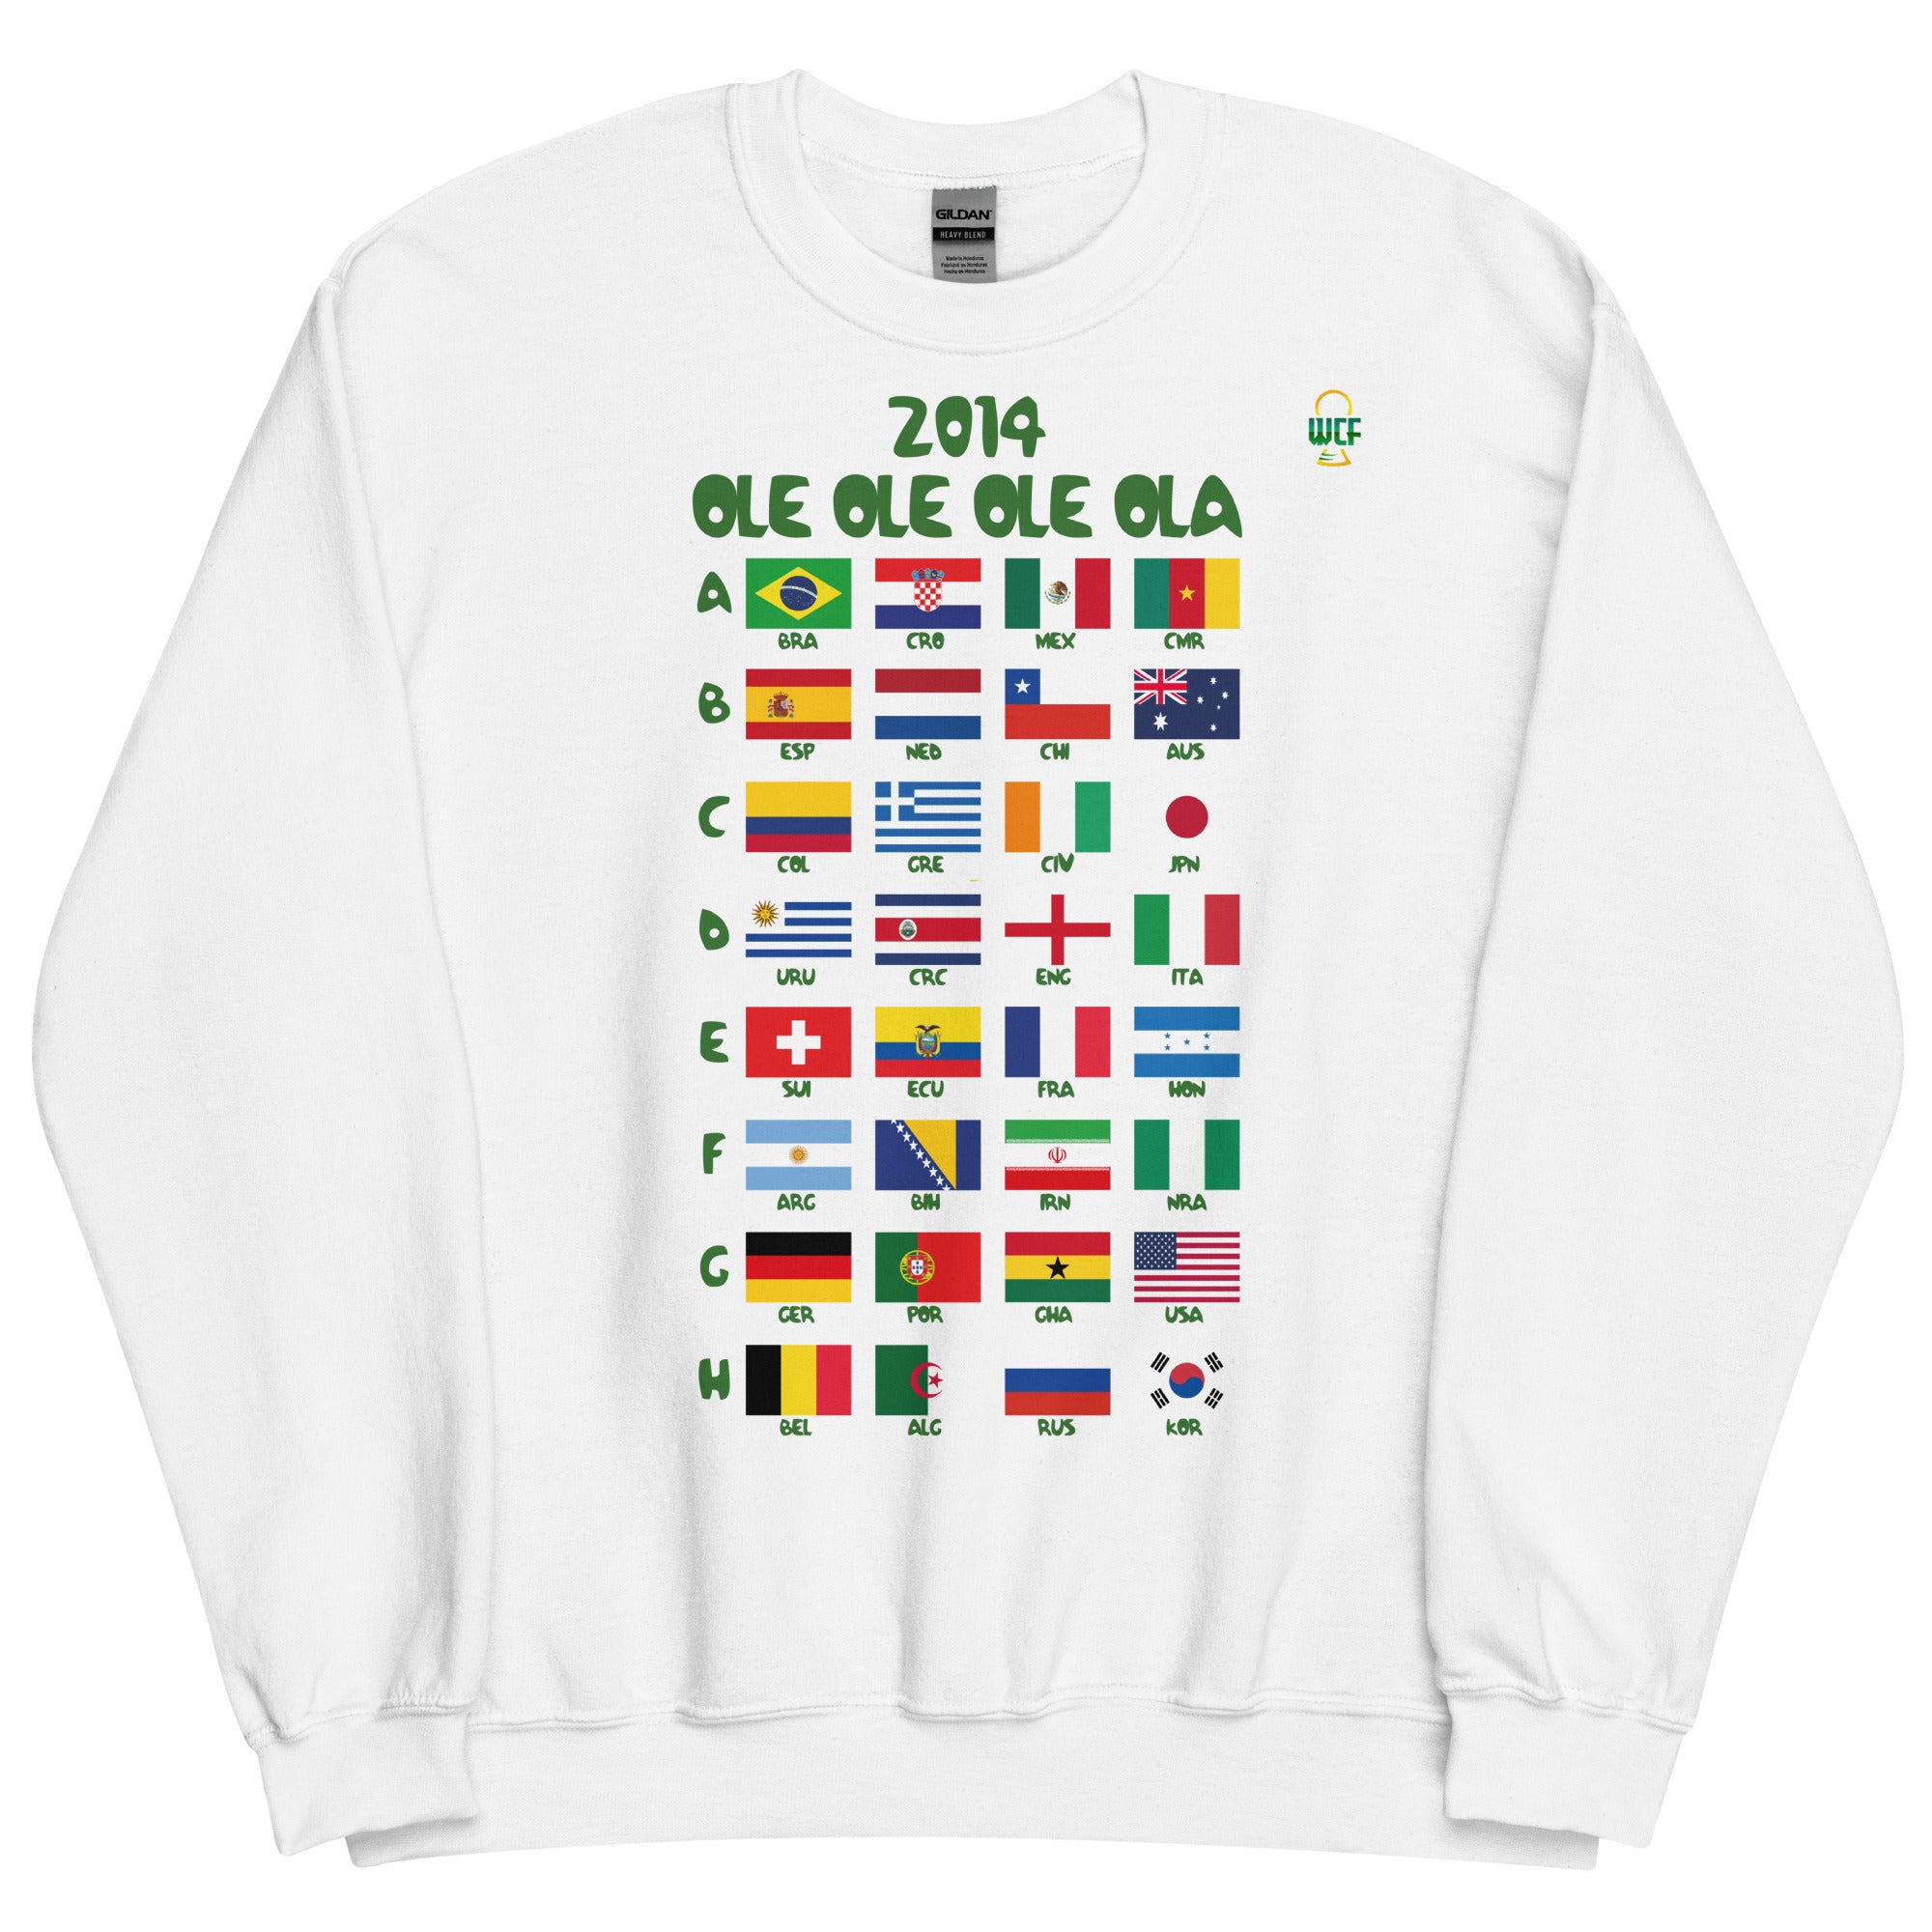 FIFA World Cup Brazil 2014 Sweatshirt - Ole Ole Ole Ola